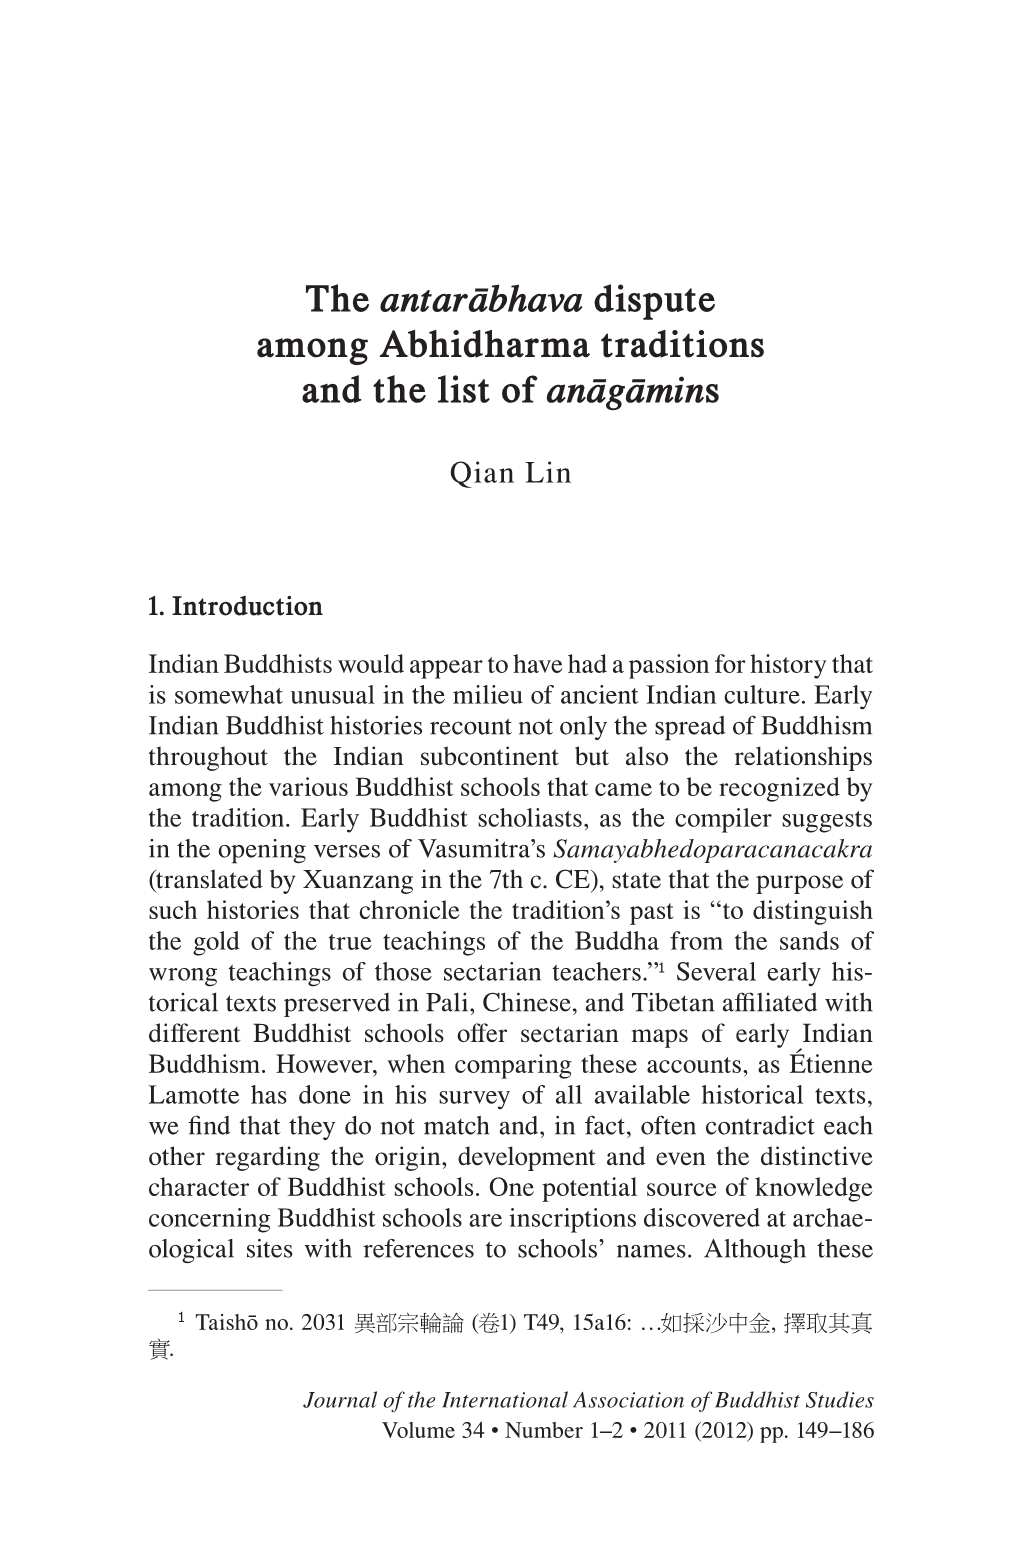 The Antarābhava Dispute Among Abhidharma Traditions and the List of Anāgāmins